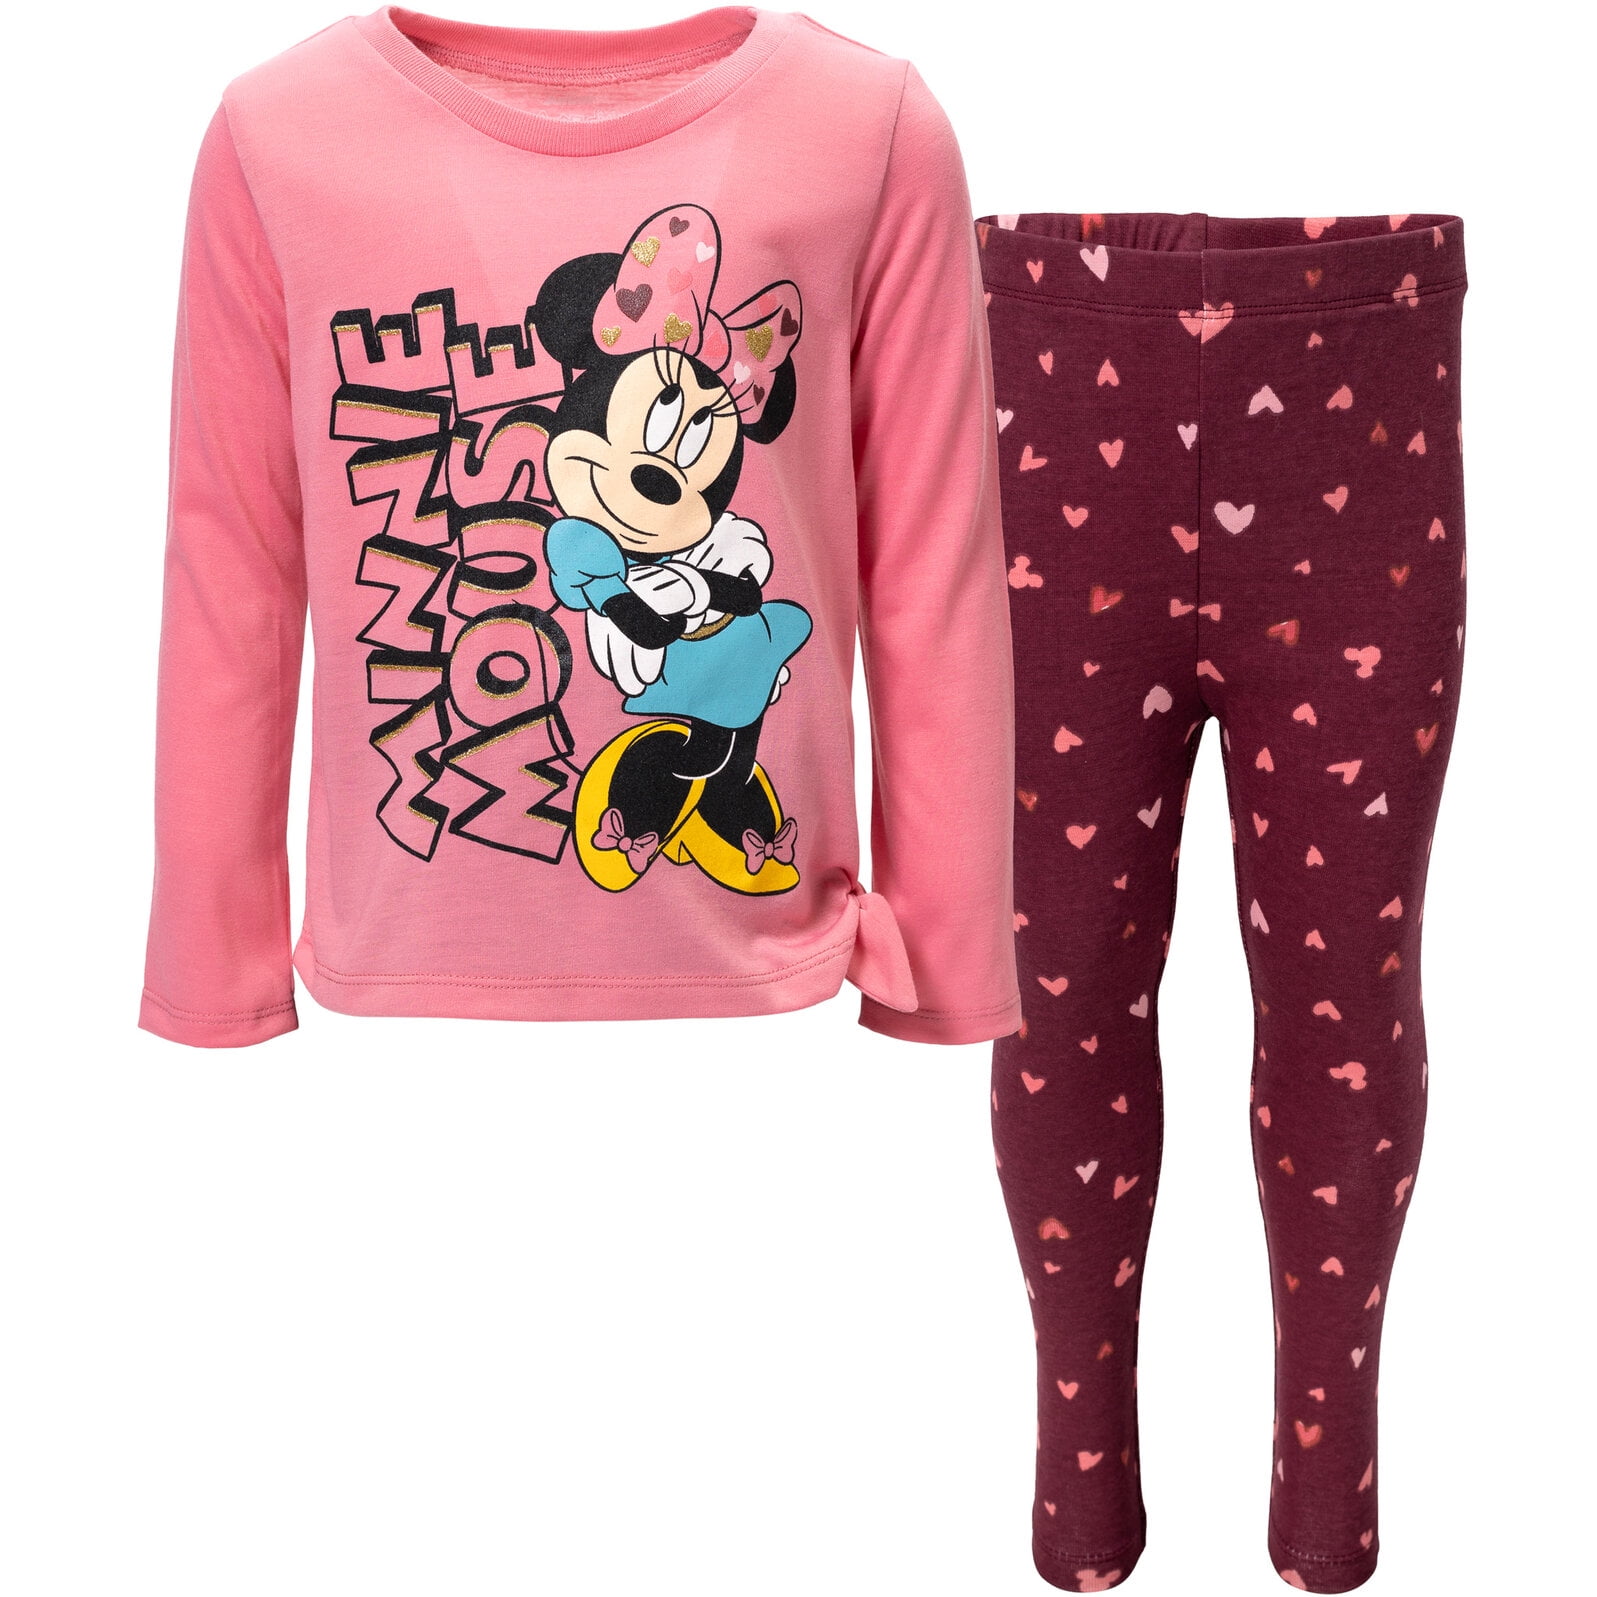 Disney Minnie Mouse Infant Baby Girls Peplum T-Shirt and Leggings